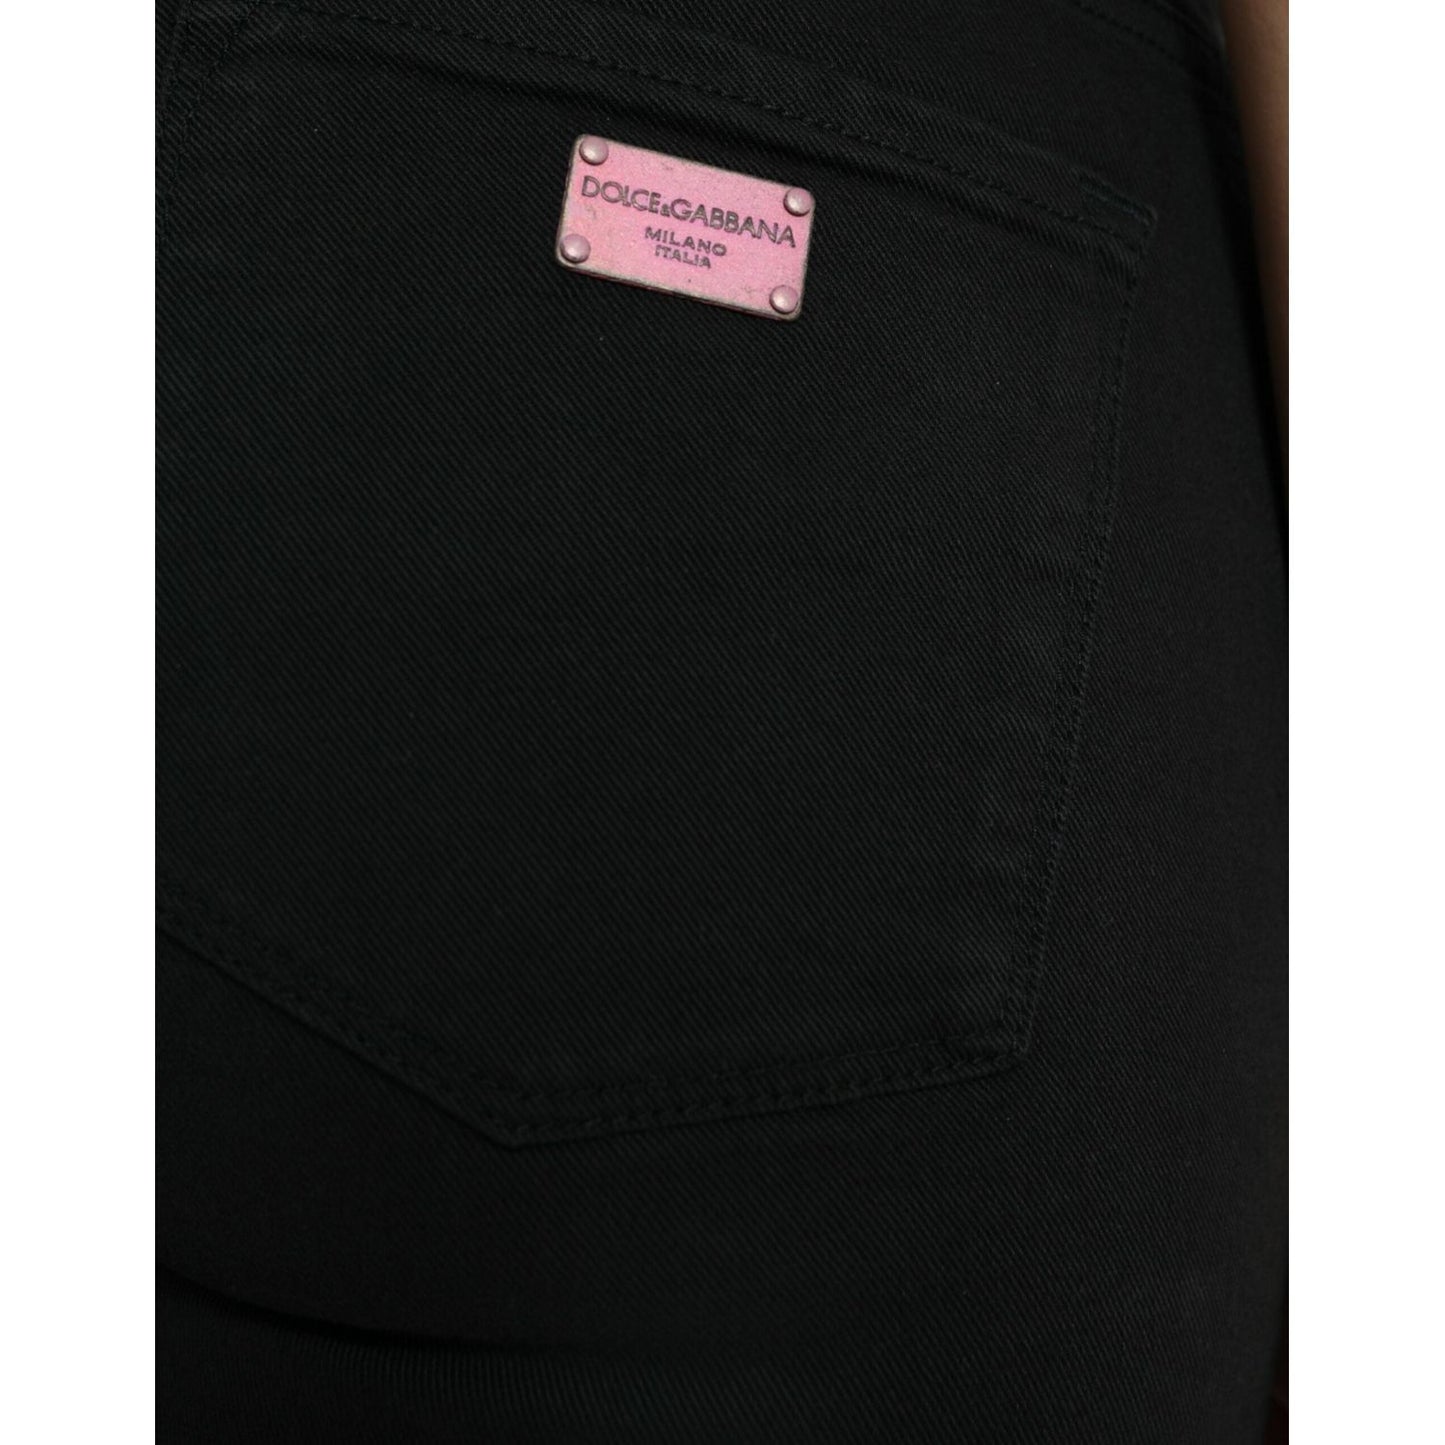 Dolce & Gabbana Elegant Black Mid-Waist Stretch Jeans black-cotton-mid-waist-skinny-denim-jeans-3